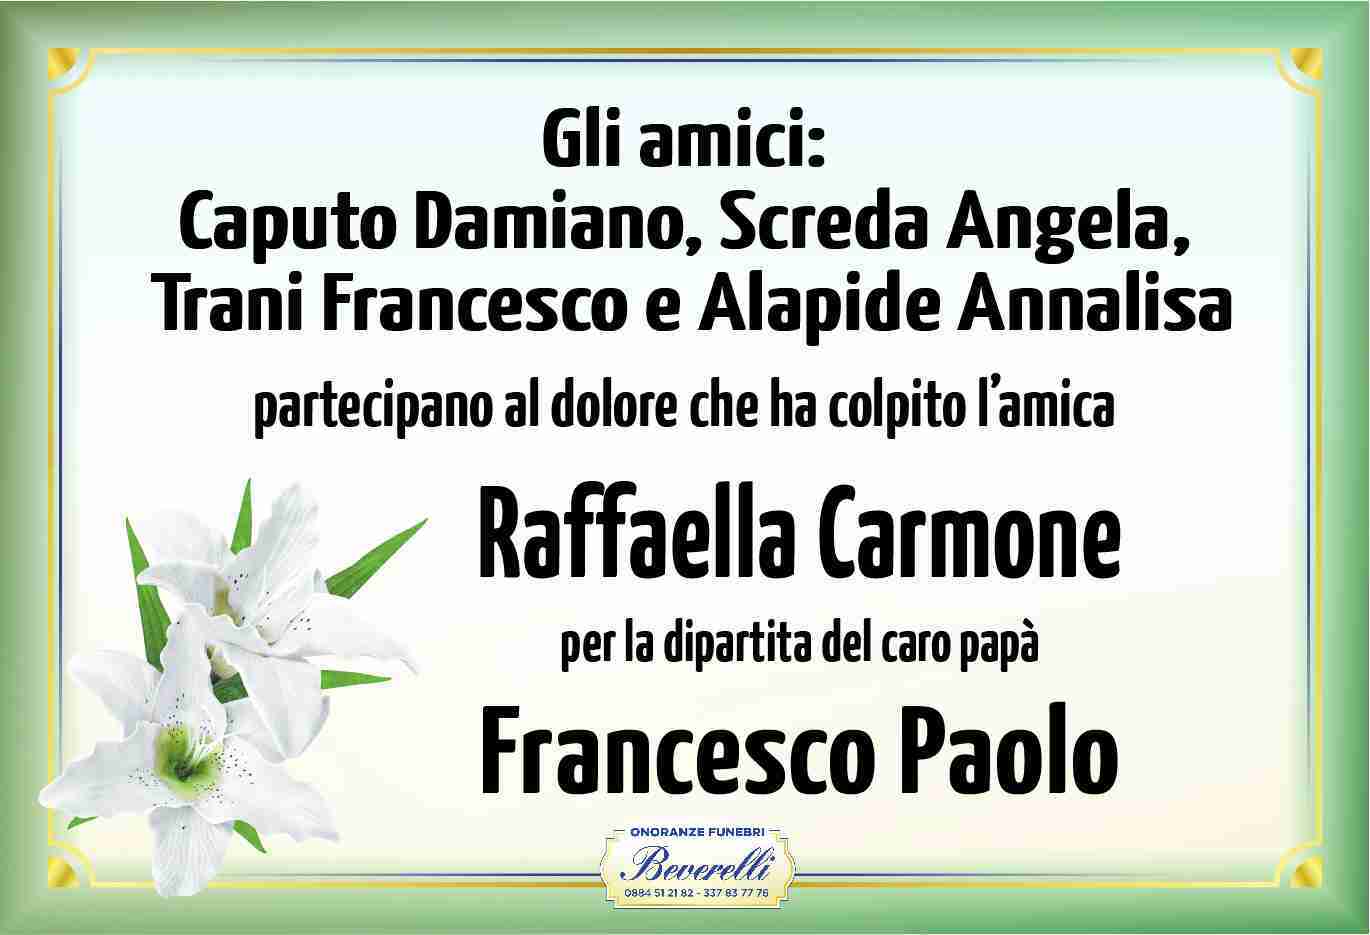 Francesco Paolo Carmone